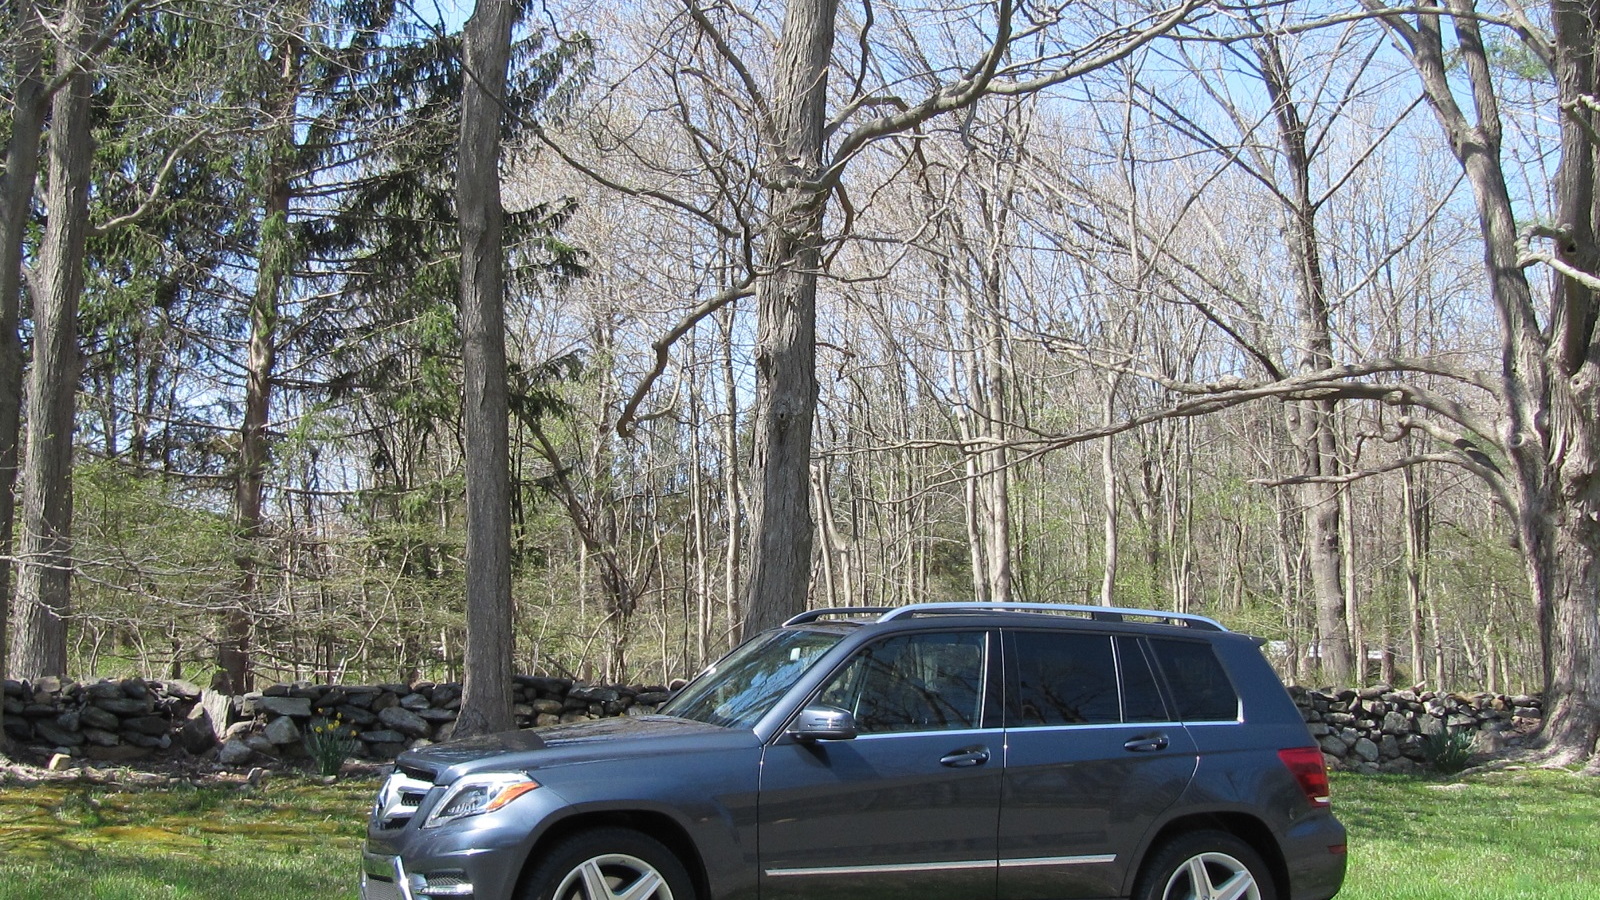 2013 Mercedes-Benz GLK 250 BlueTEC, upstate New York, April 2013